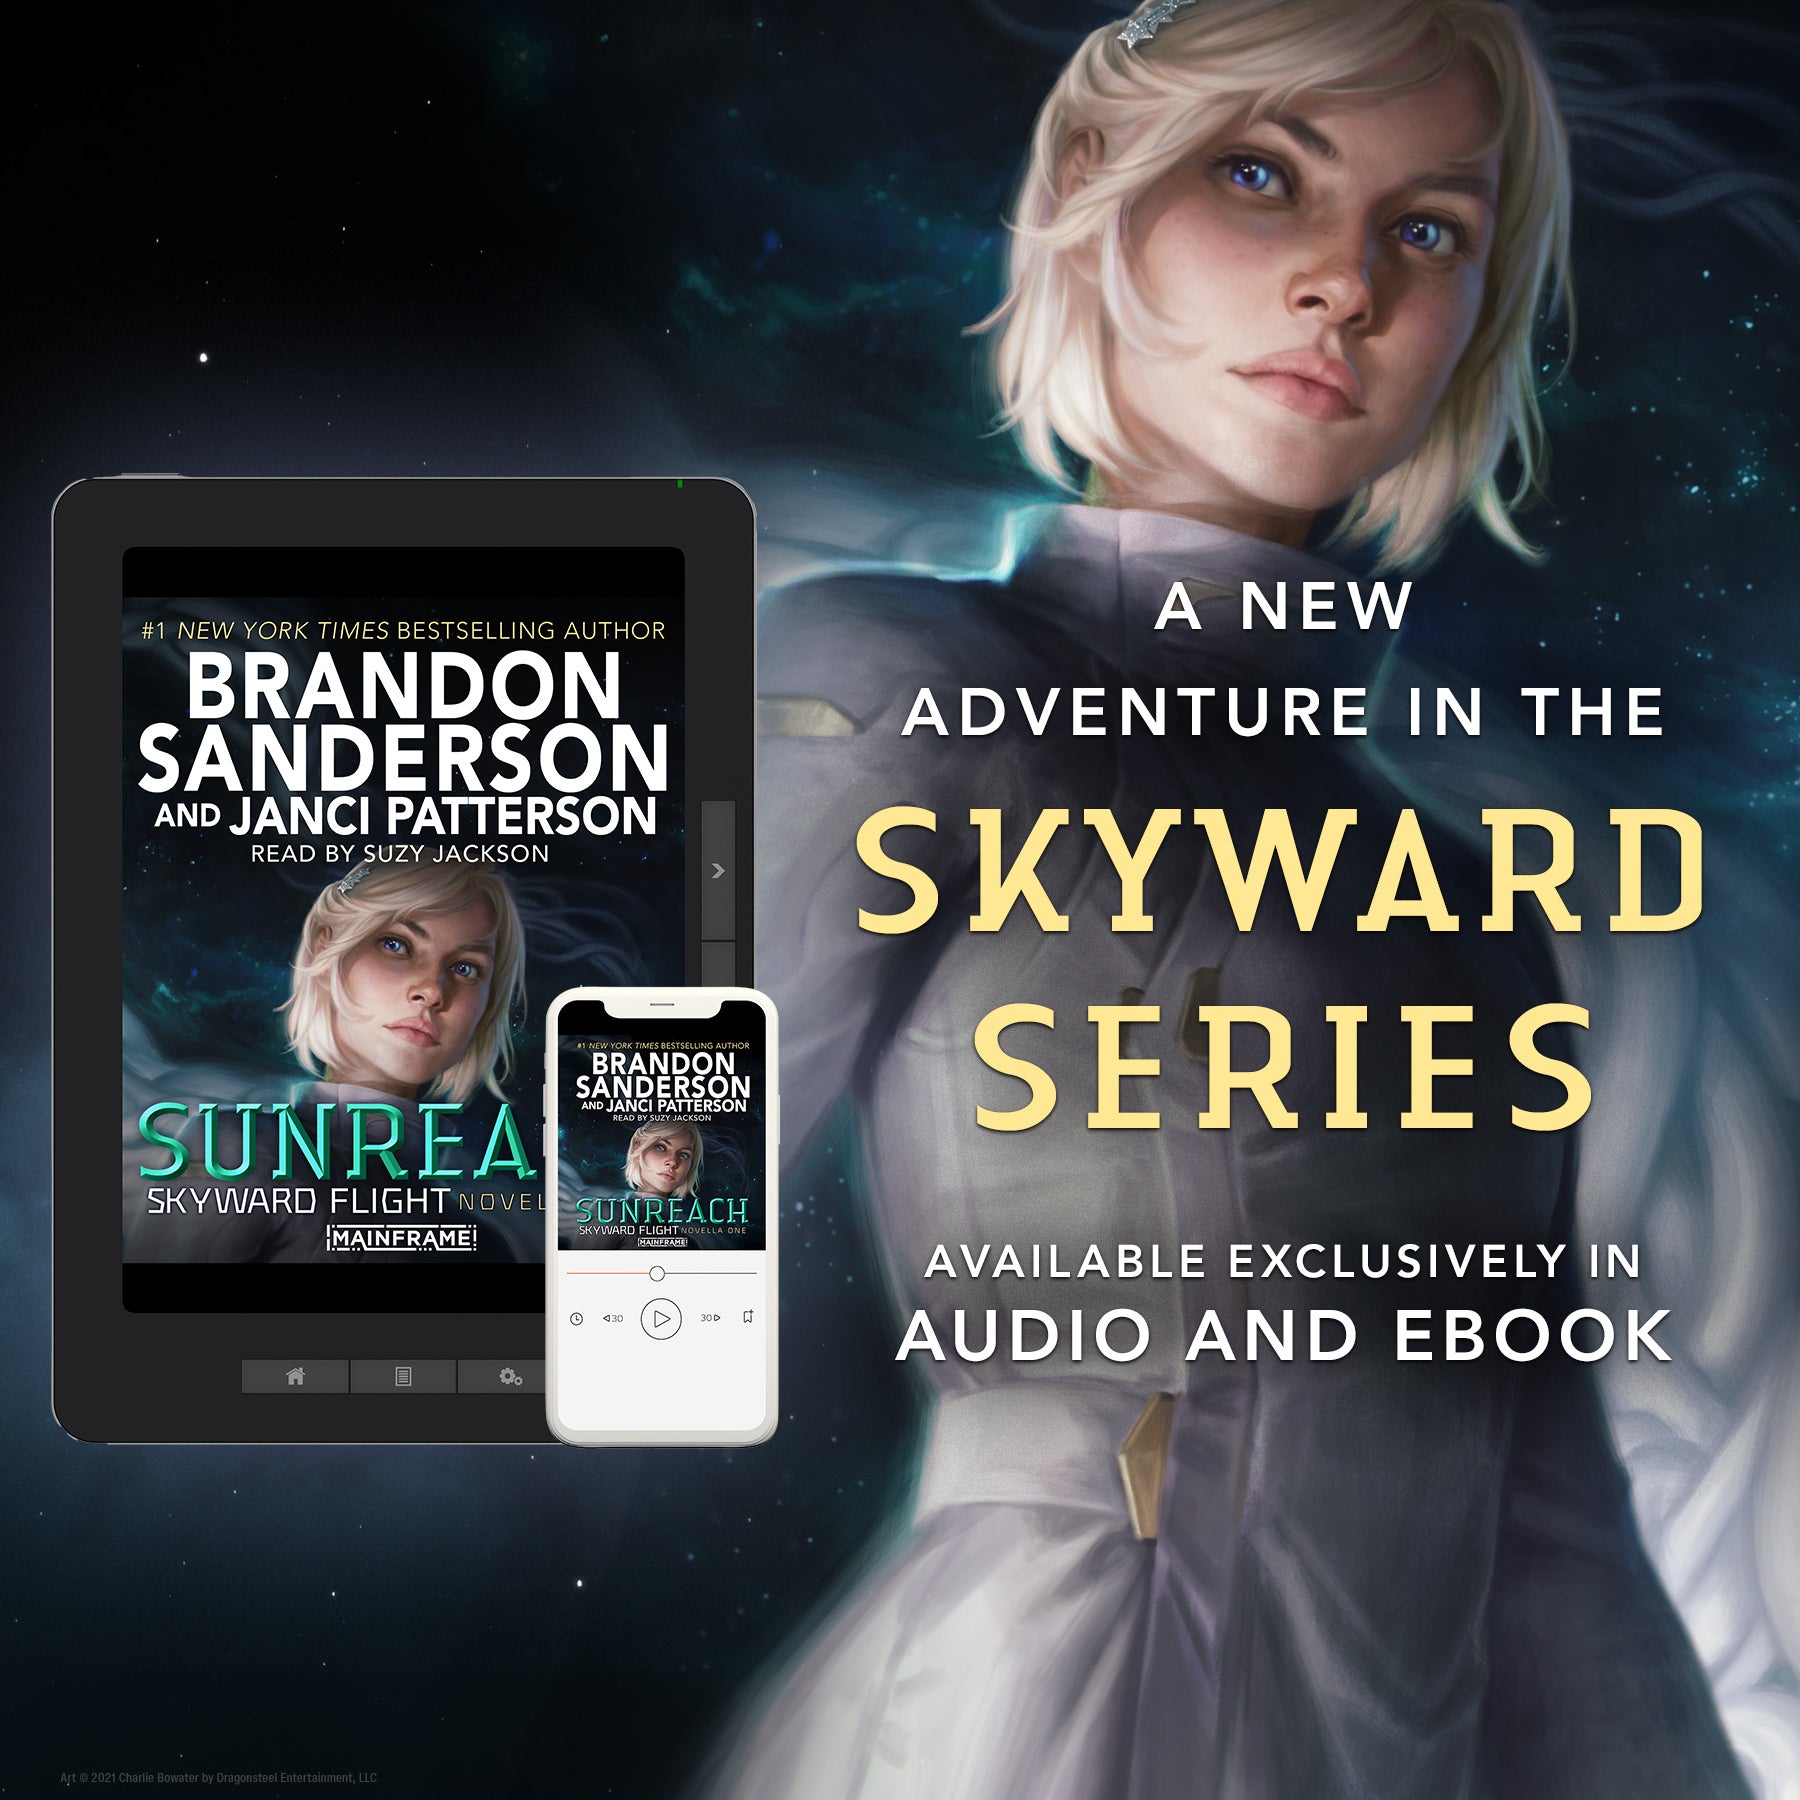 Evershore (Skyward Flight: Novella 3) Audiobook by Brandon Sanderson